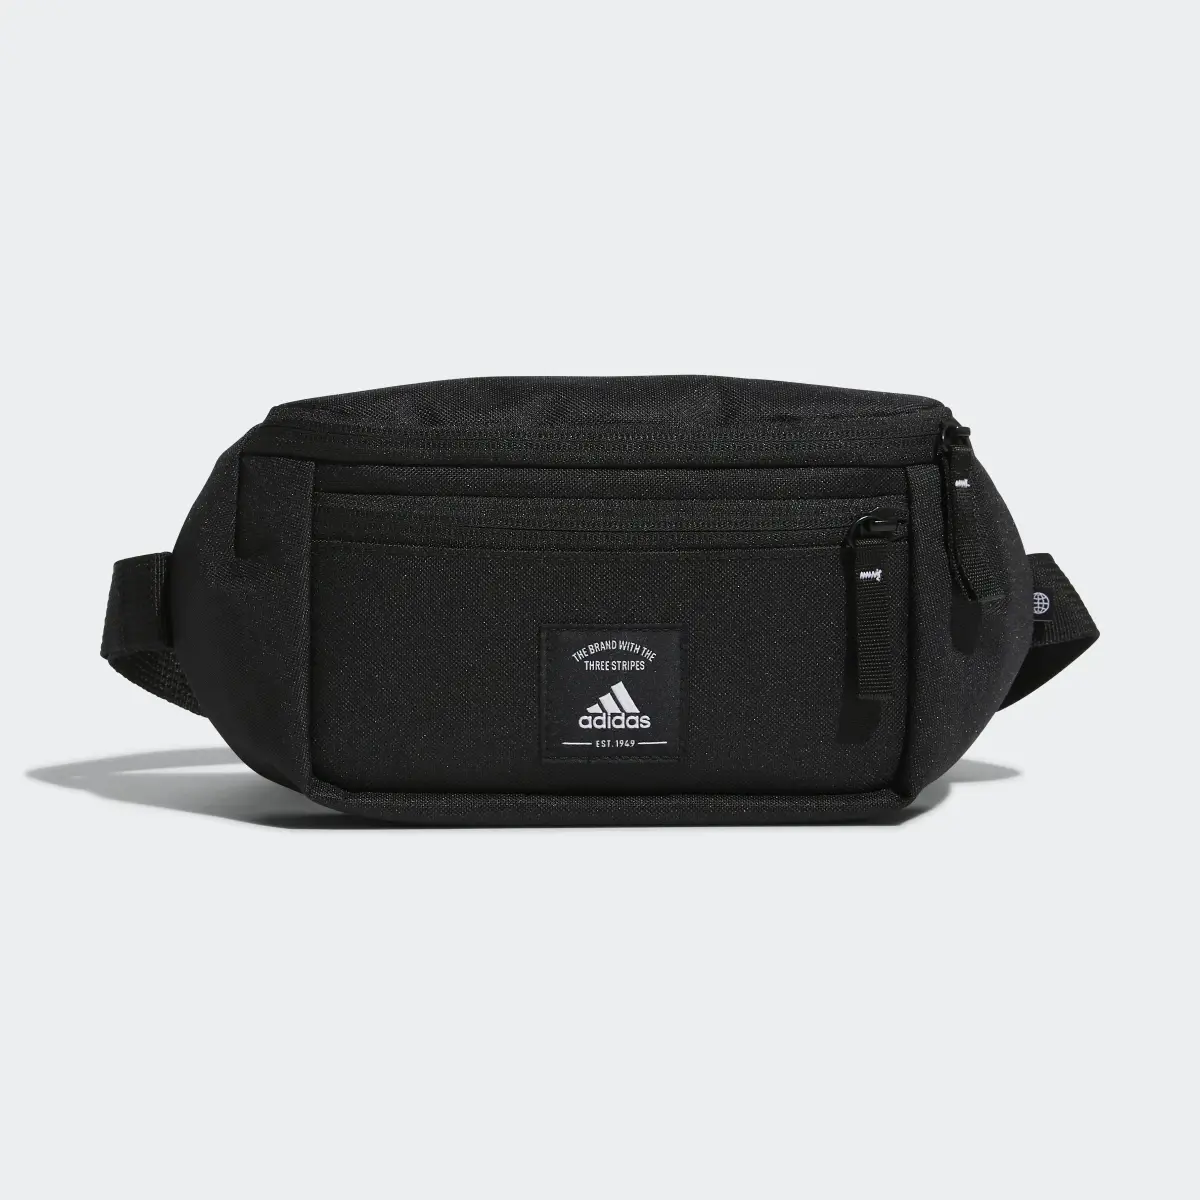 Adidas NCL WNLB Waist Bag. 2